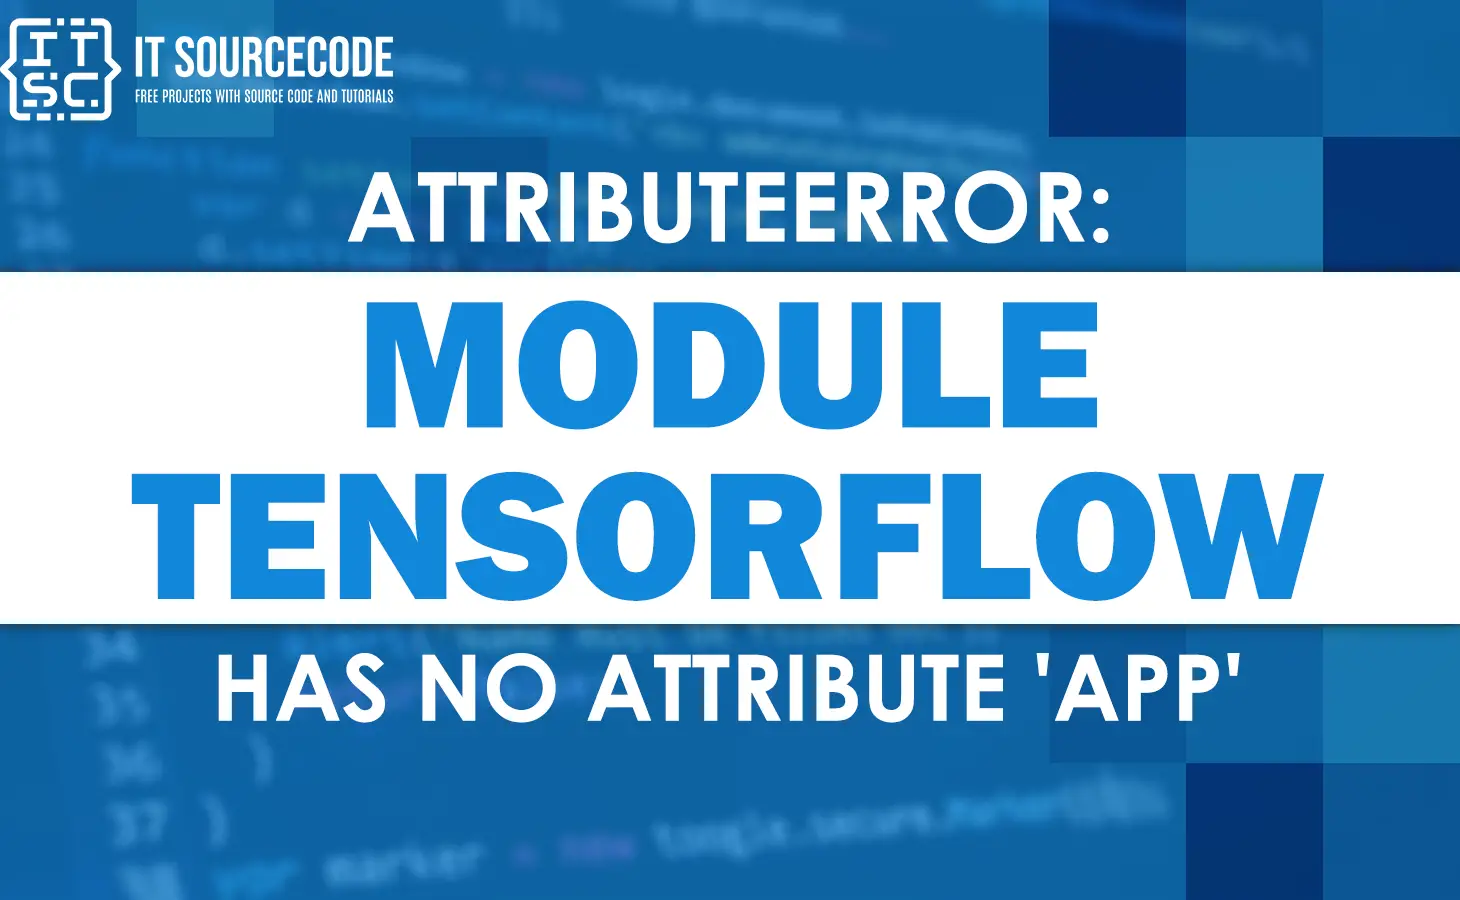 Attributeerror: module 'tensorflow' has no attribute 'app'